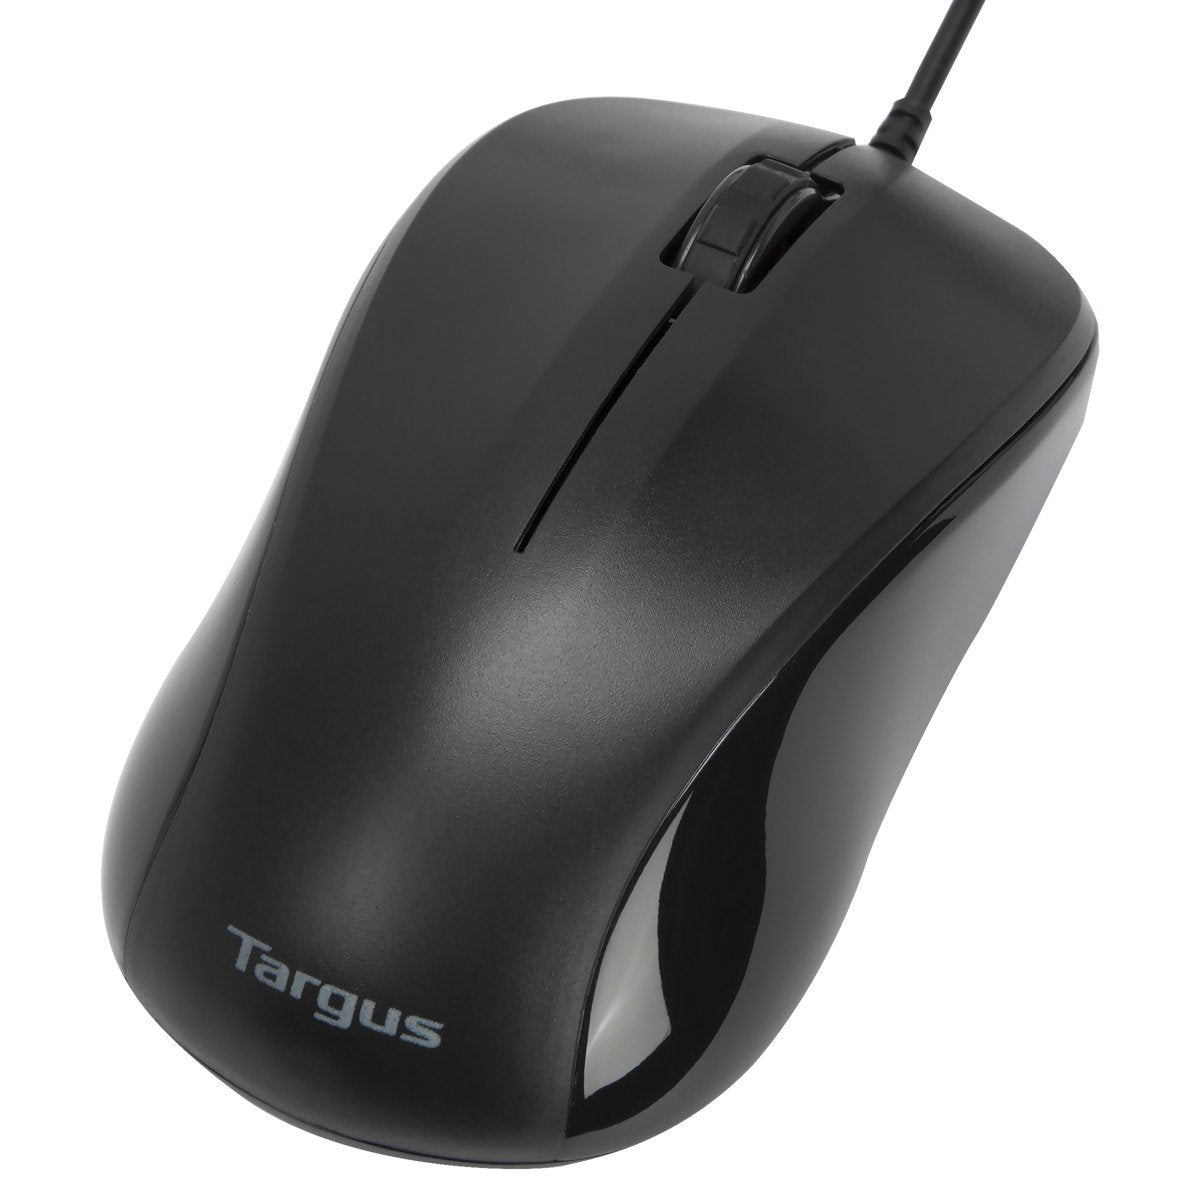 Targus 3 Button Optical USB/PS2 Mouse